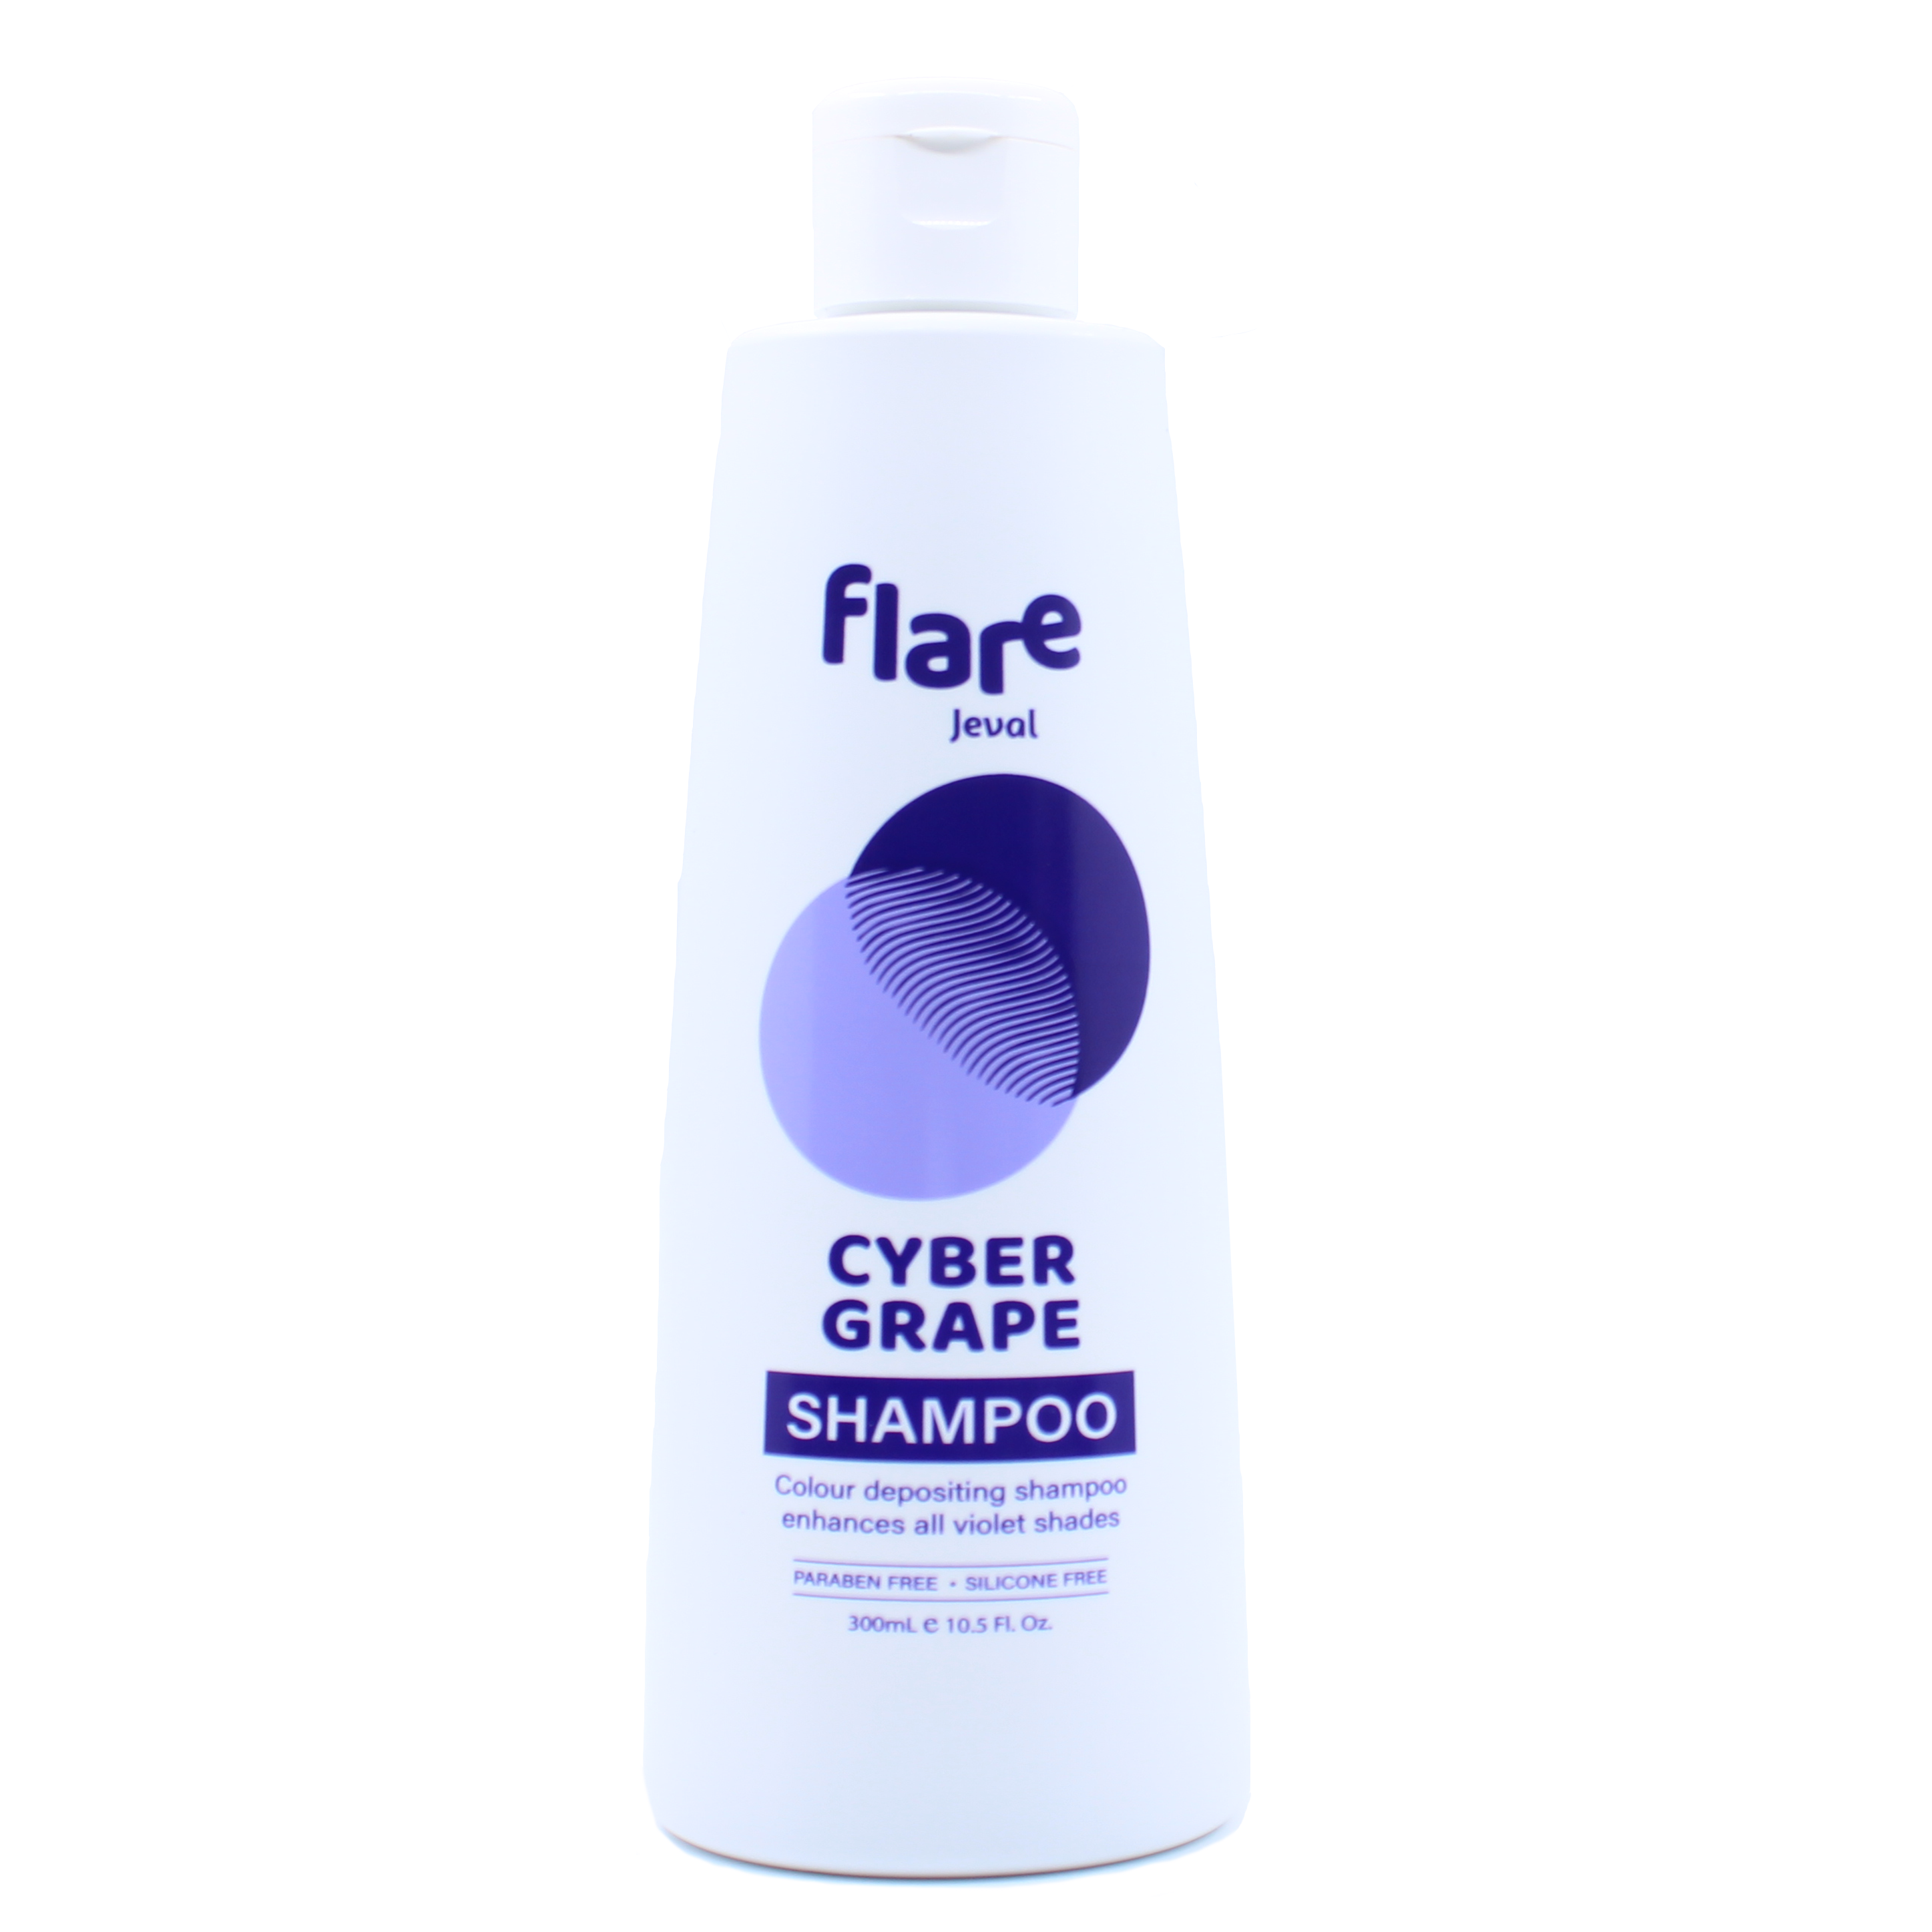 Flare Cyber Grape Shampoo 300ml